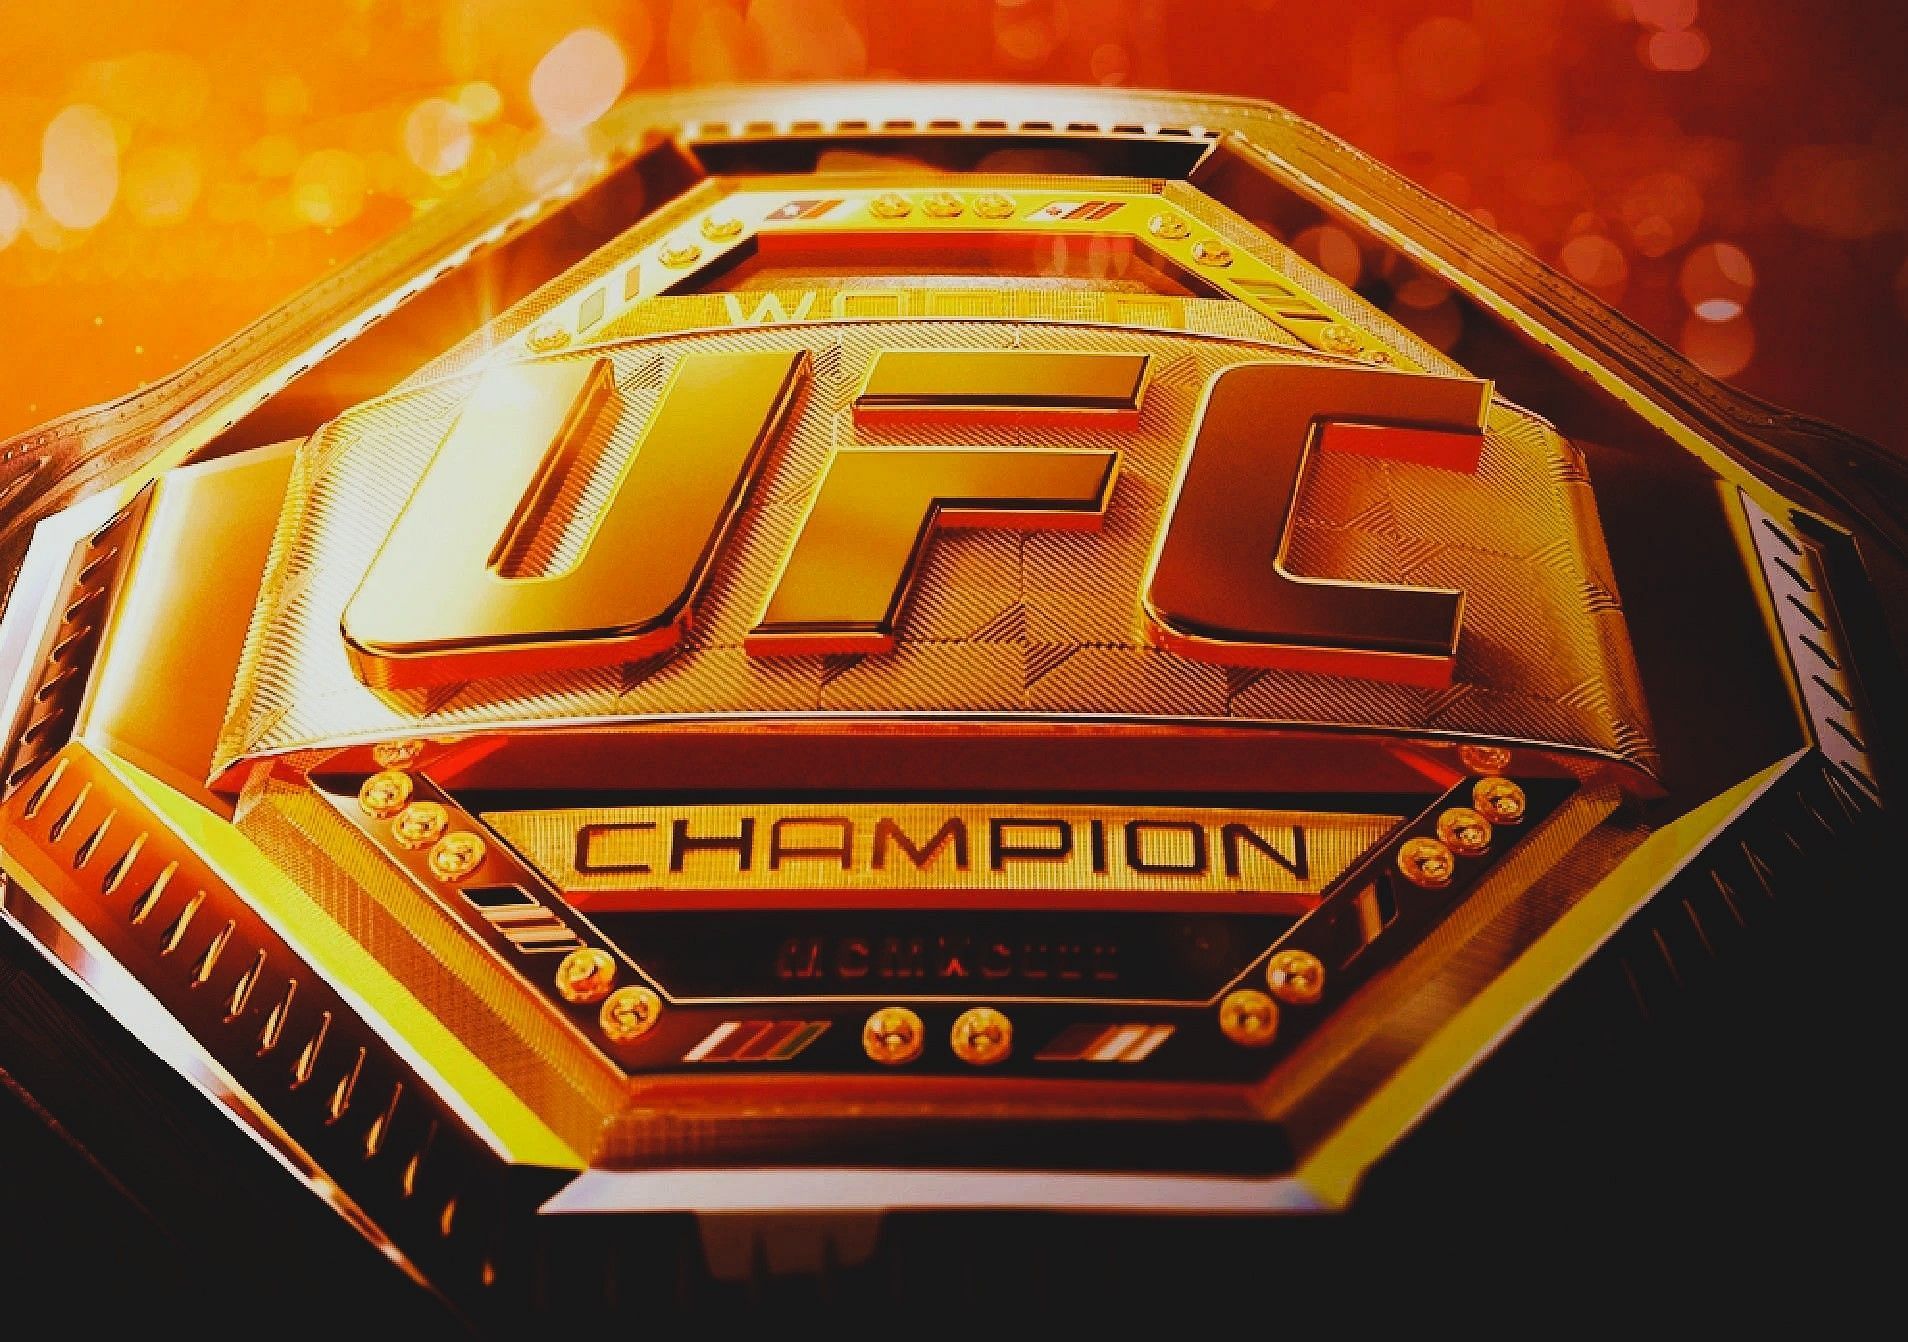 UFC championship belt [Image via Getty]